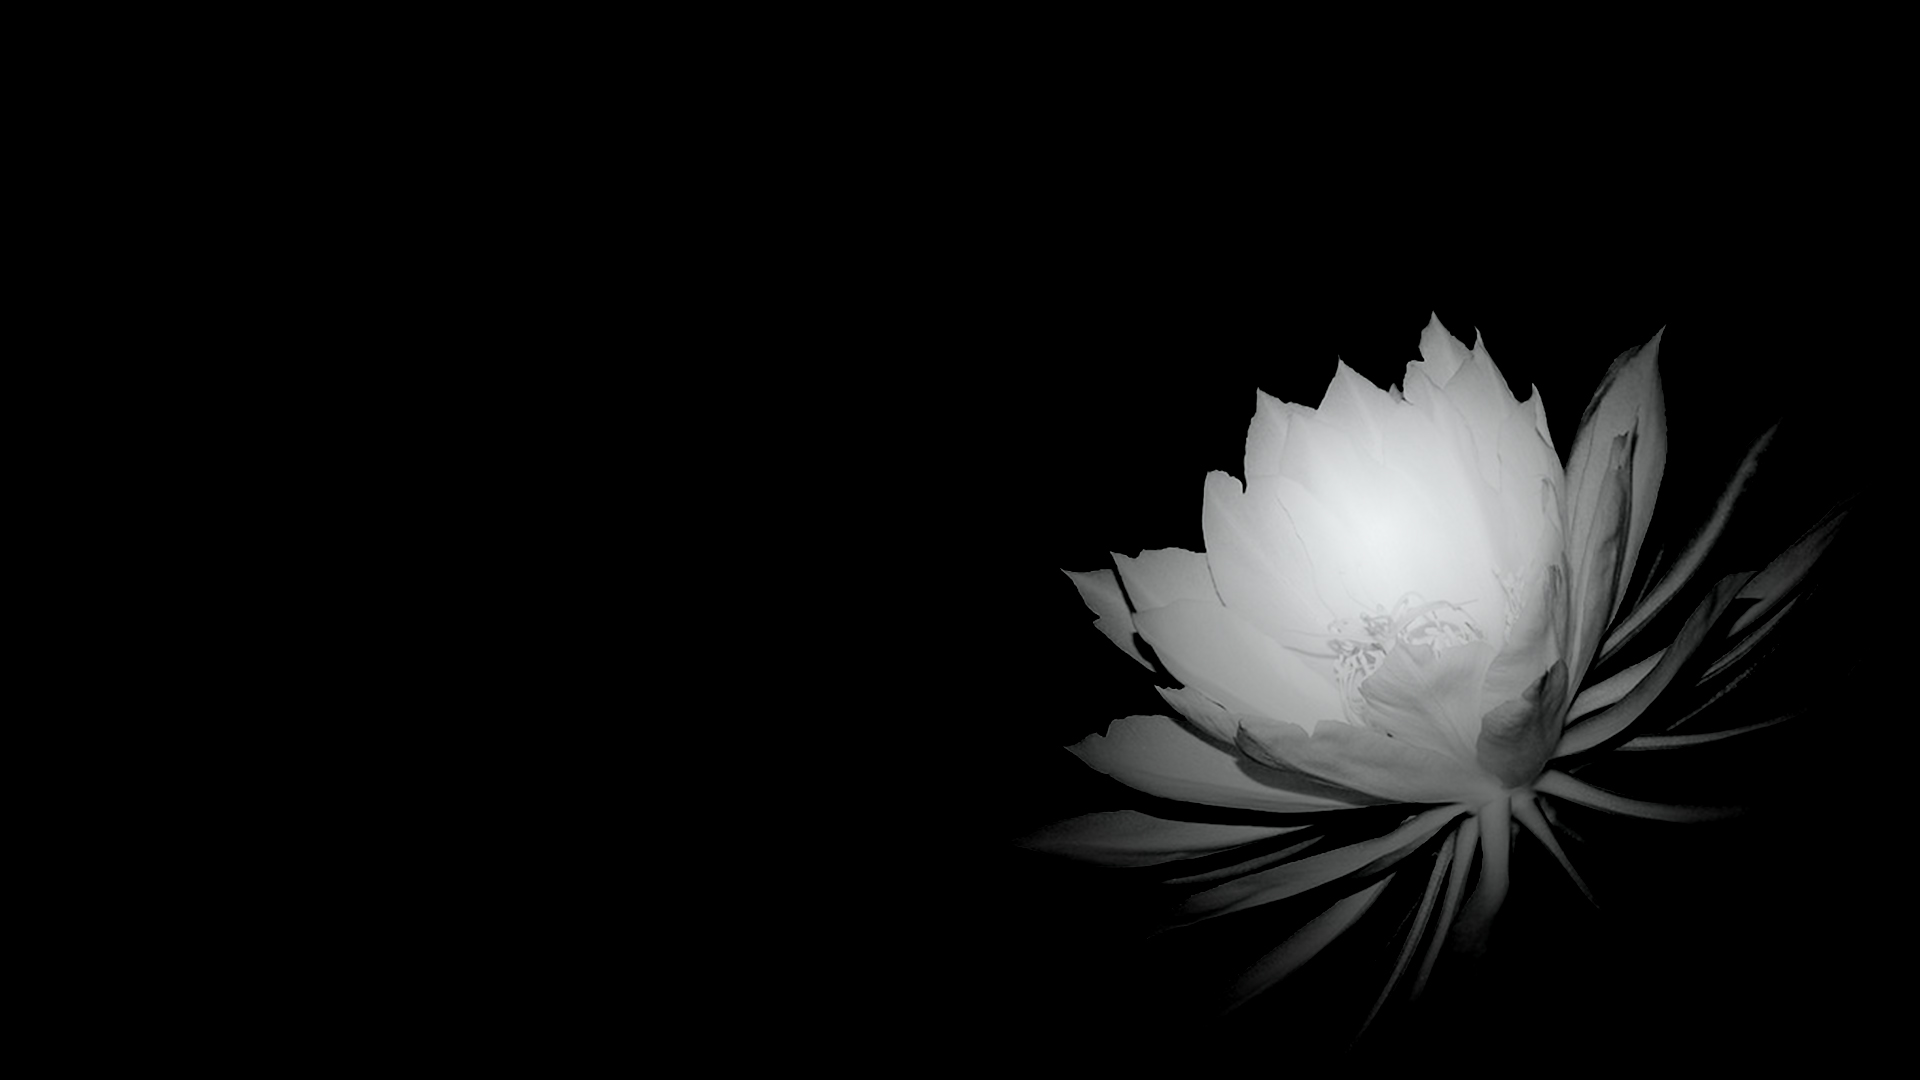 75 Pc 壁紙 白黒 すべての美しい花の画像